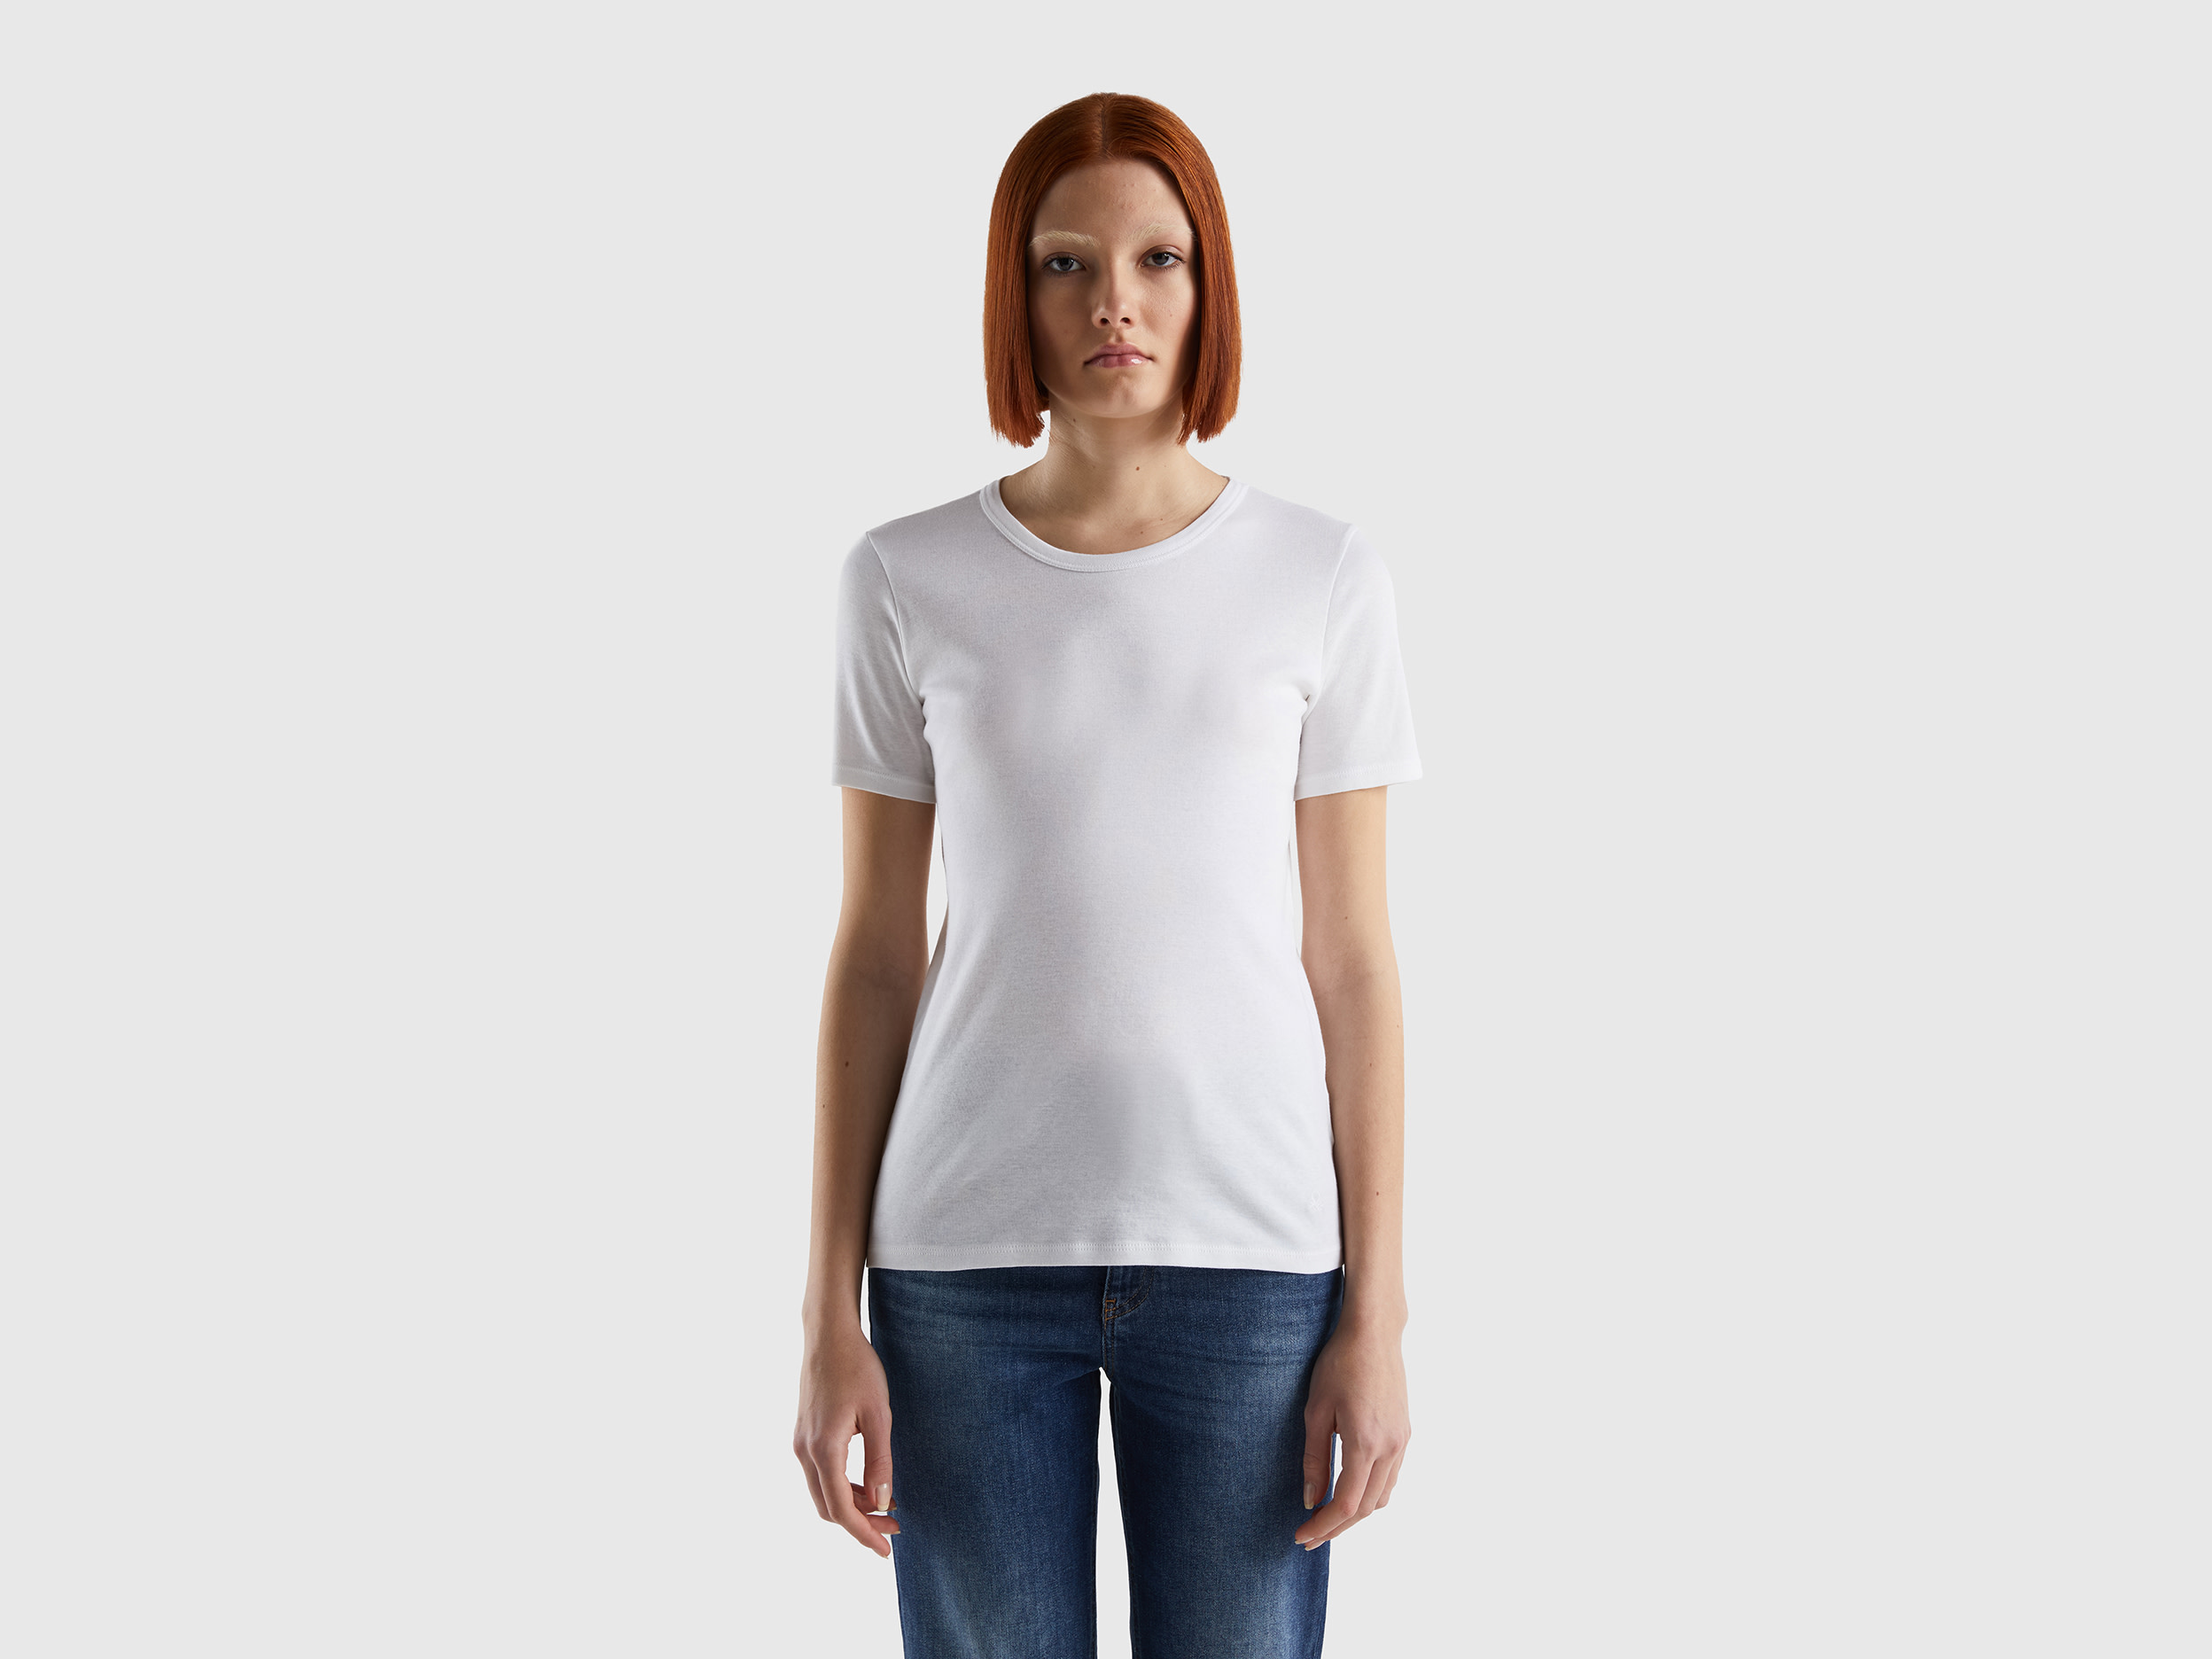 Benetton, Long Fiber Cotton T-shirt, size M, White, Women